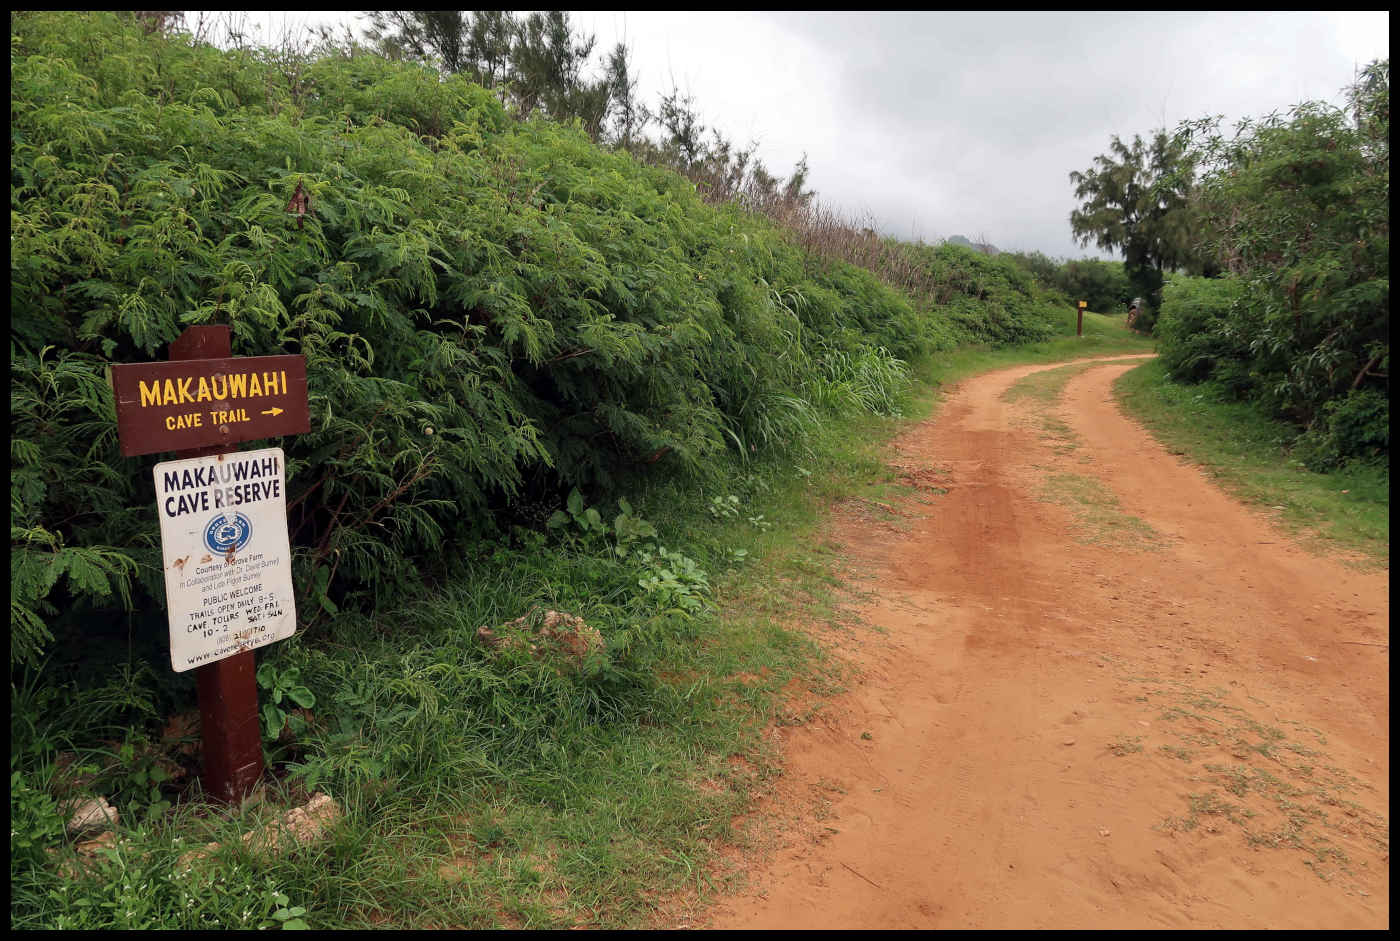 Información - Makauwahi Cave Trail